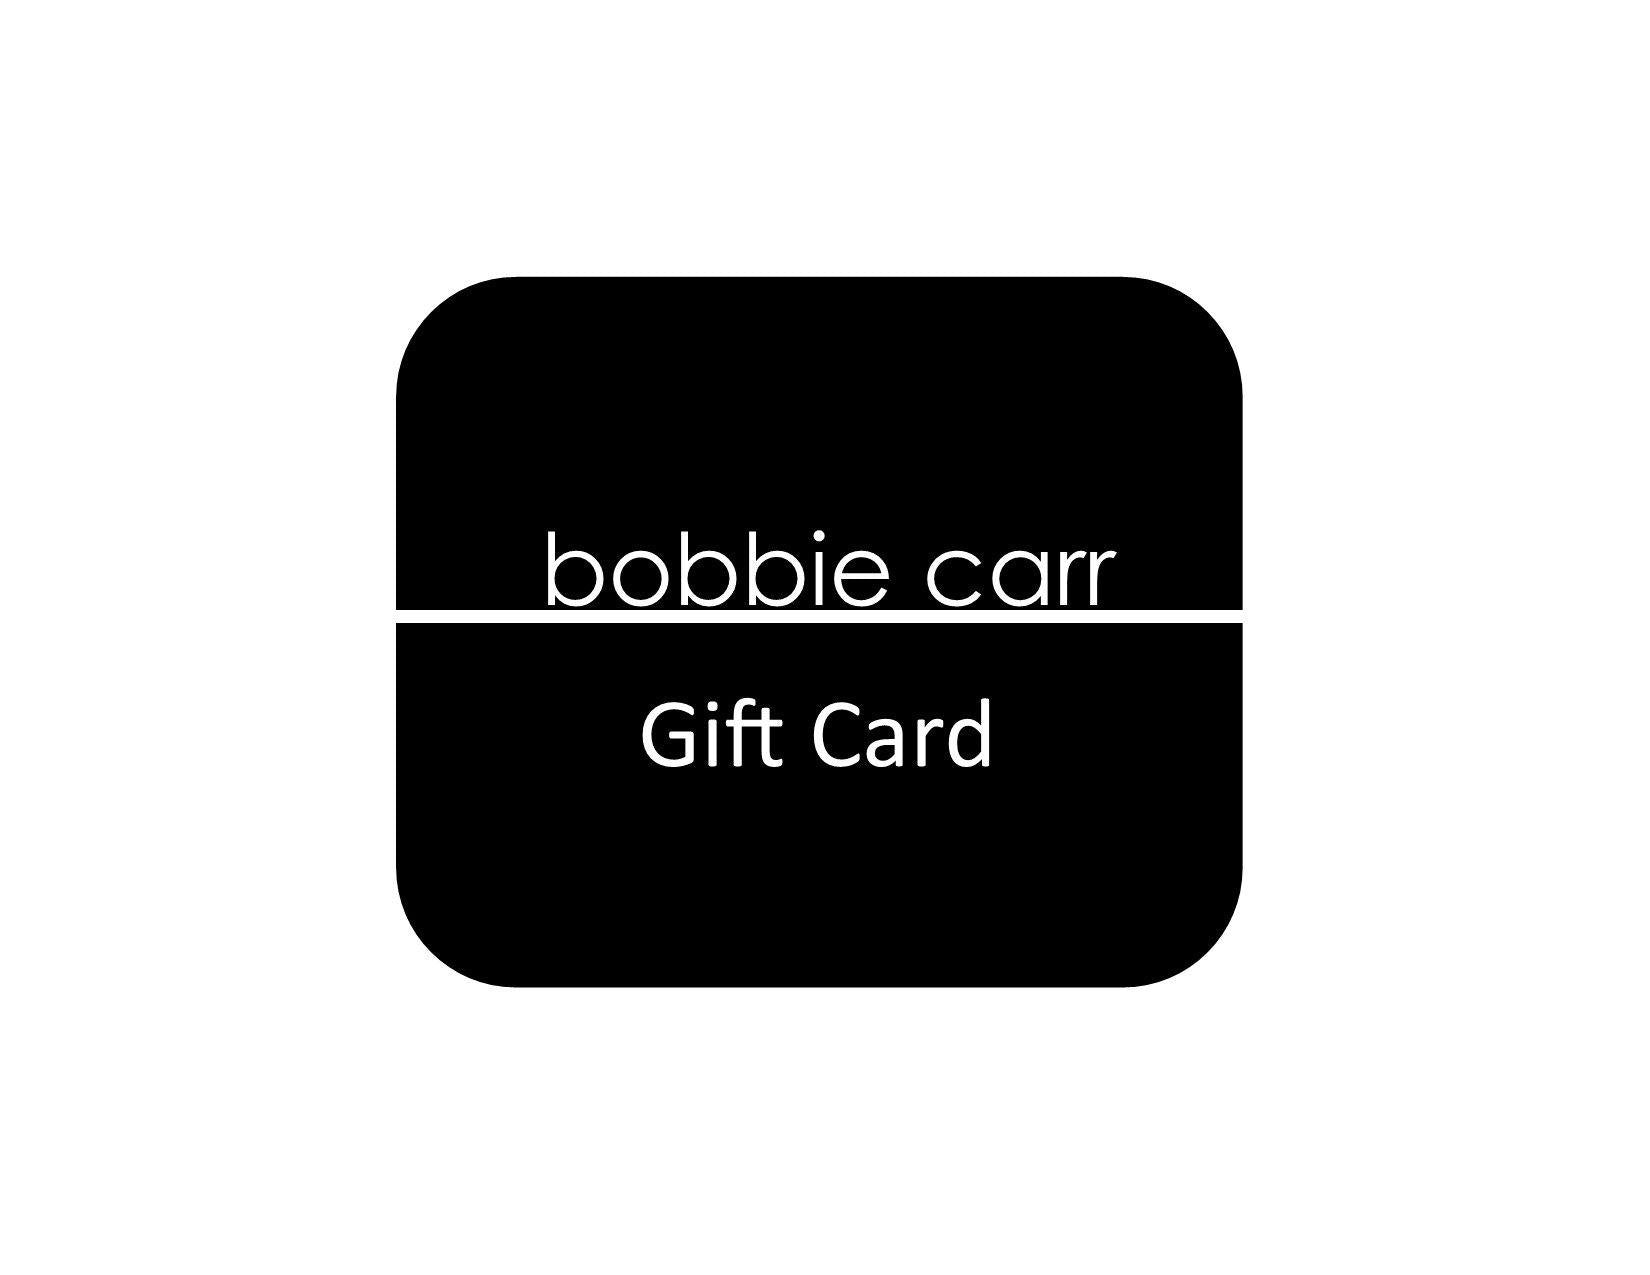 Gift Card - bobbie carr